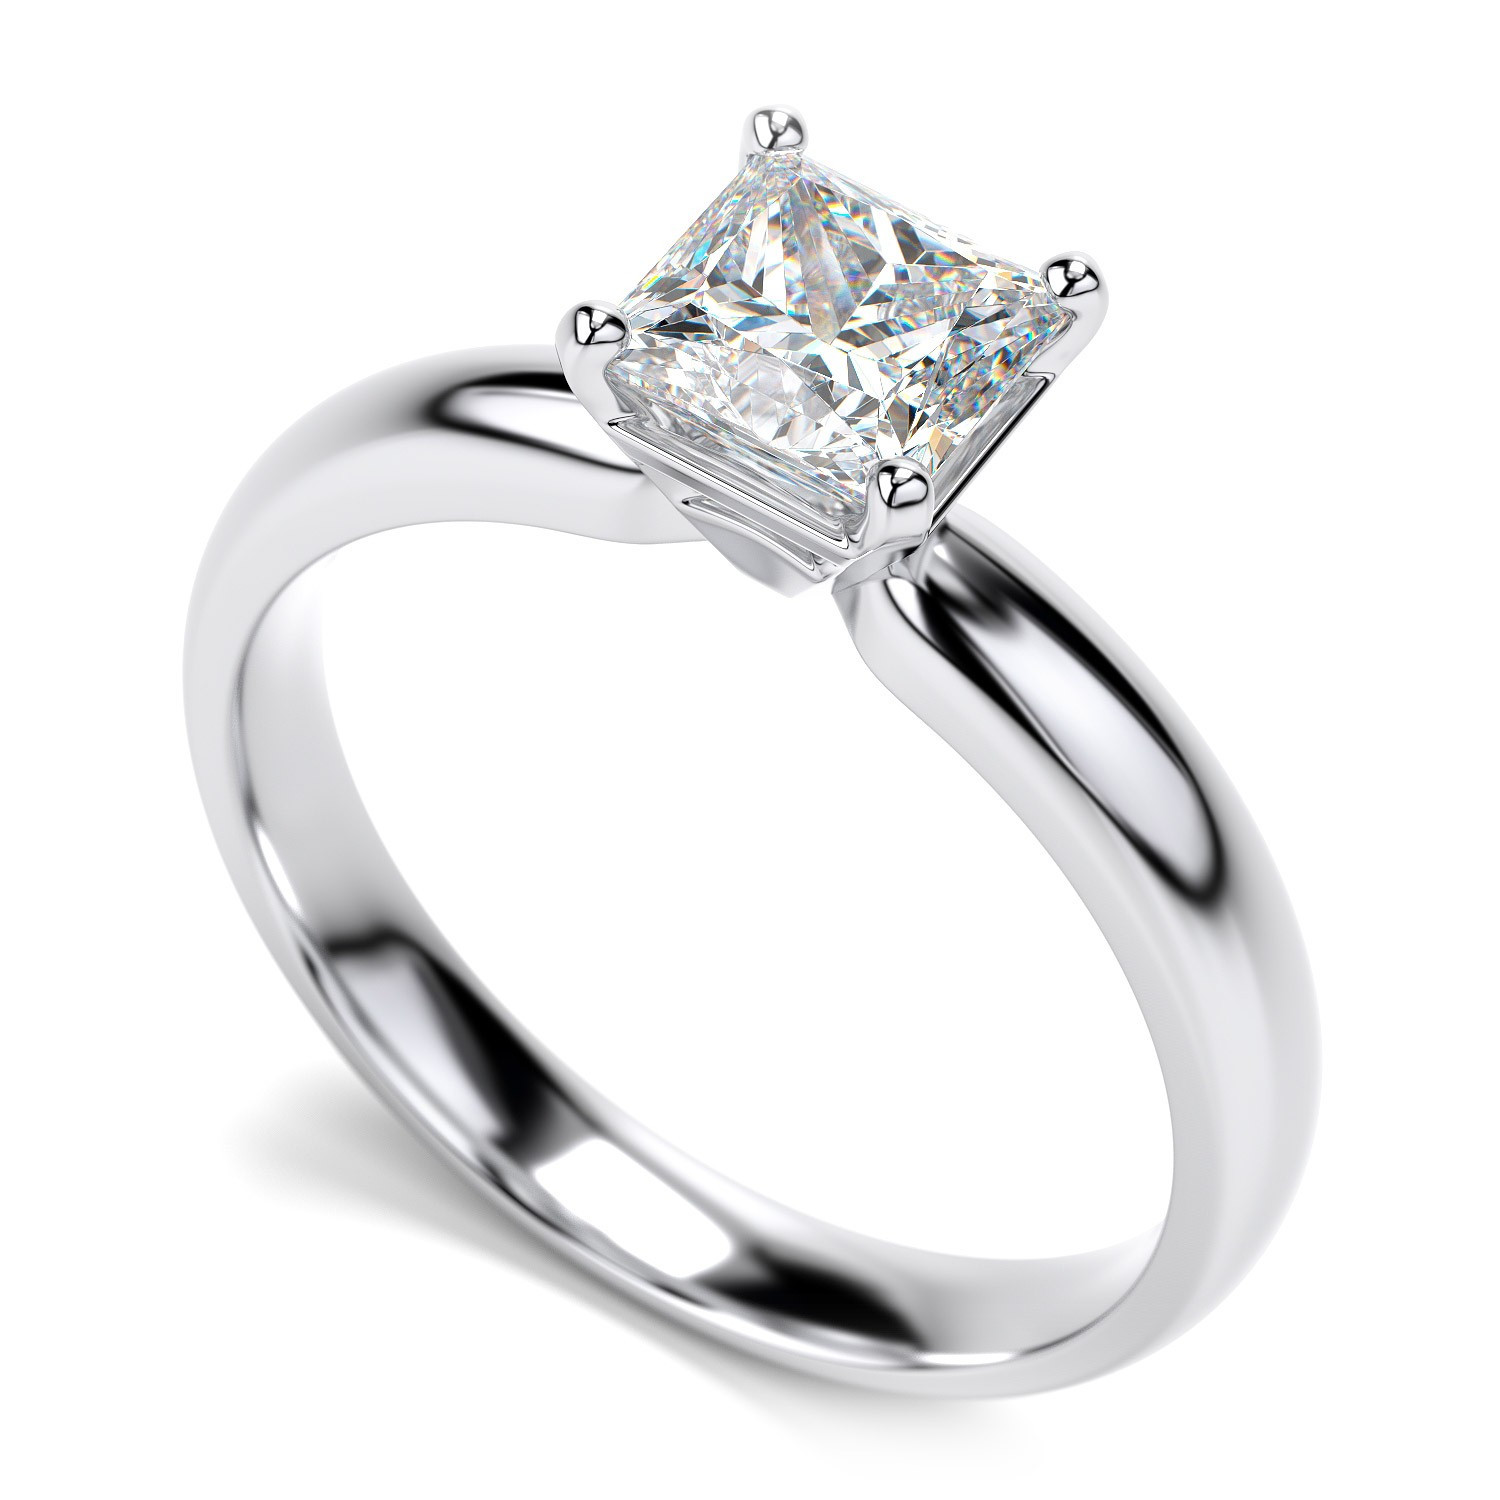 Princess Cut Diamond Engagement Rings White Gold
 14K White Gold Diamond Princess Cut Solitaire Engagement